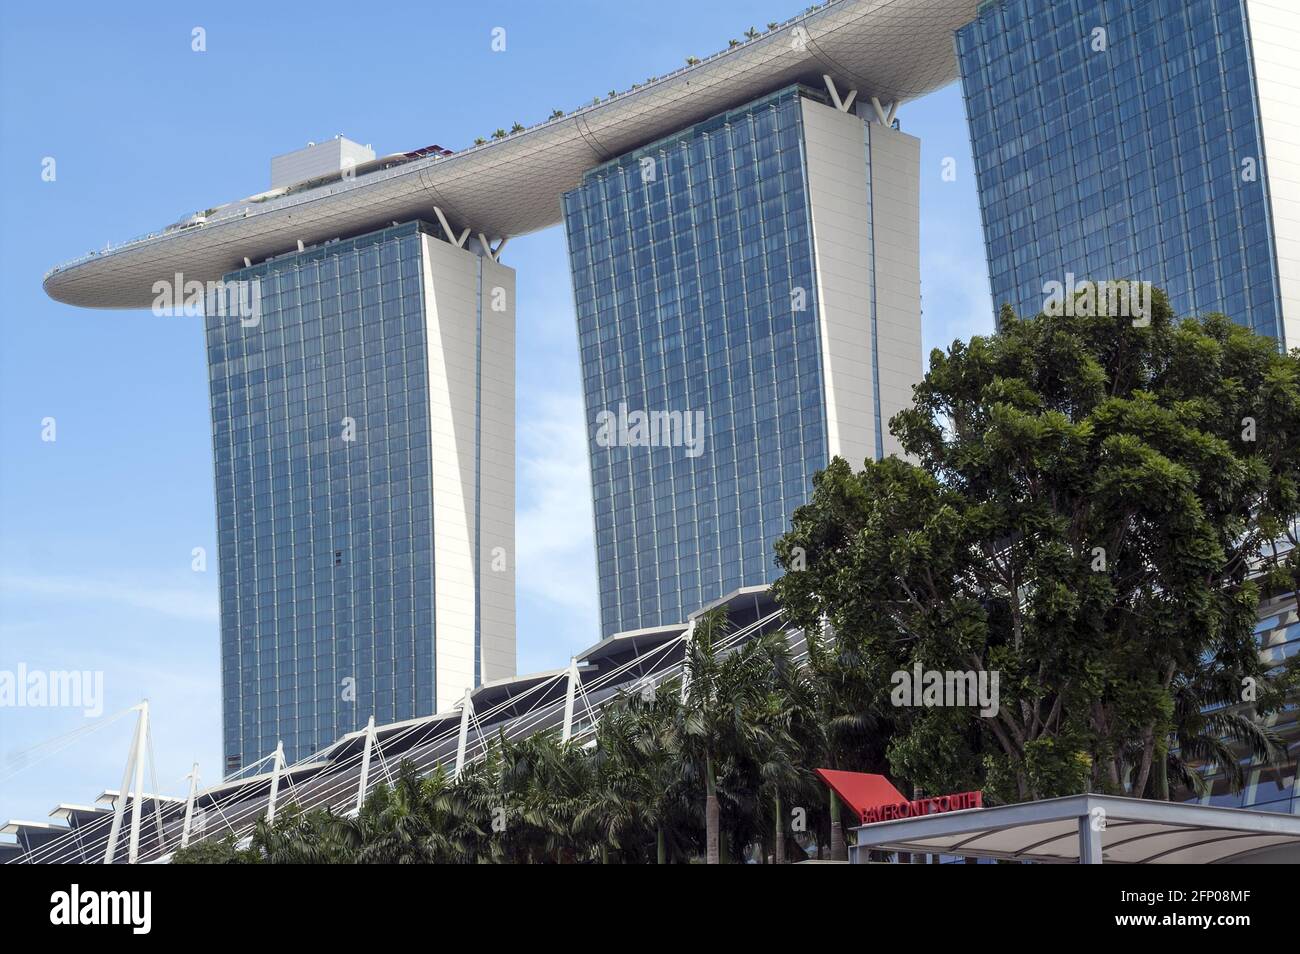 Singapore, Singapur, Asia, Asien; Luxury Marina Bay Sands Hotel and Casino; Luxuriöses Hotel und Casino; 濱海灣金沙酒店 Luksushowy hotel i kasyno Foto Stock